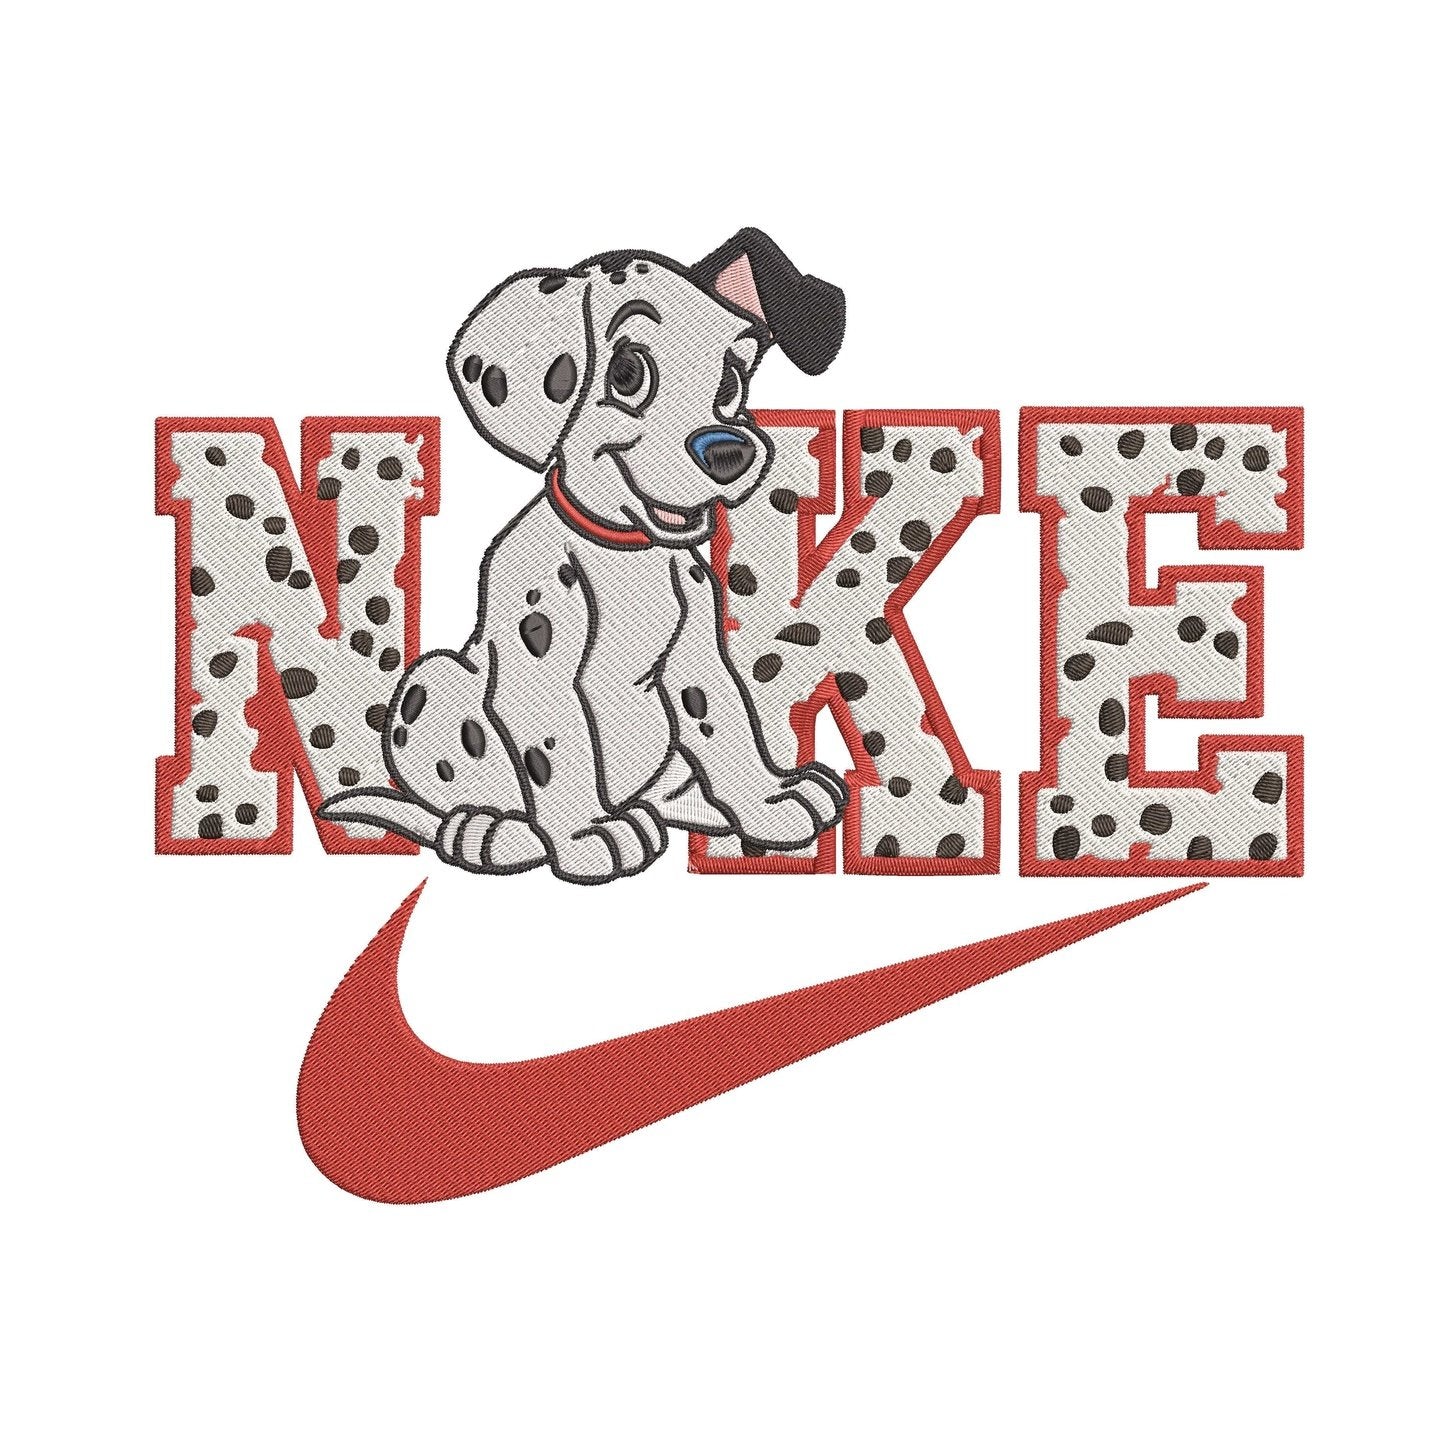 Nike 101 Dalmatians - Anime - Embroidery Design FineryEmbroidery